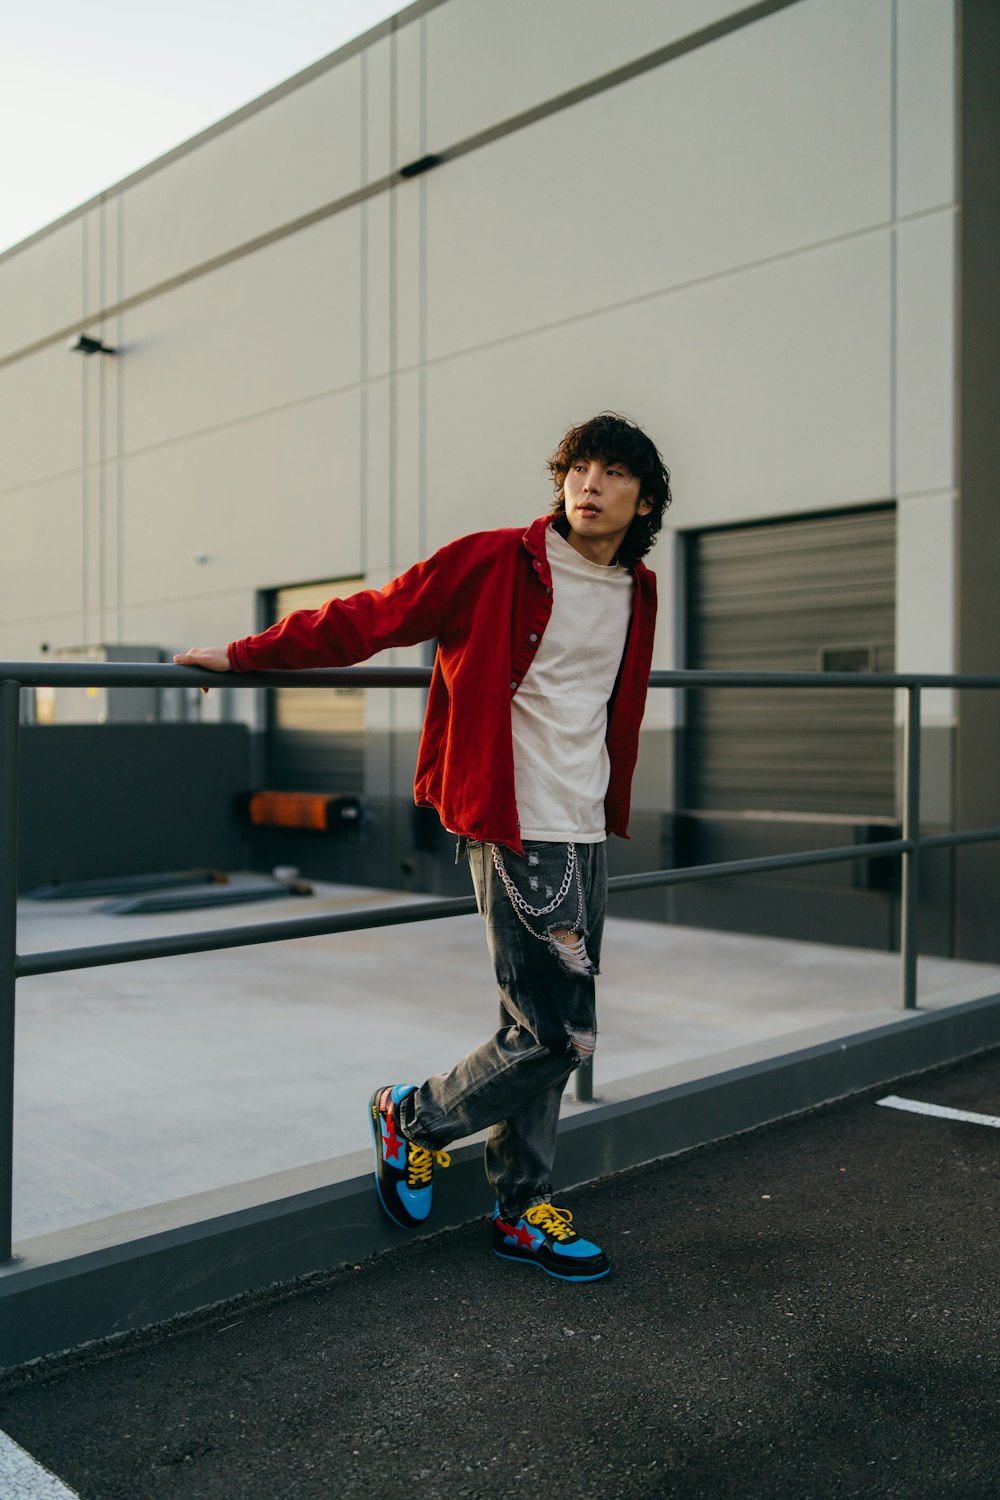 a young man riding a skateboard down a street